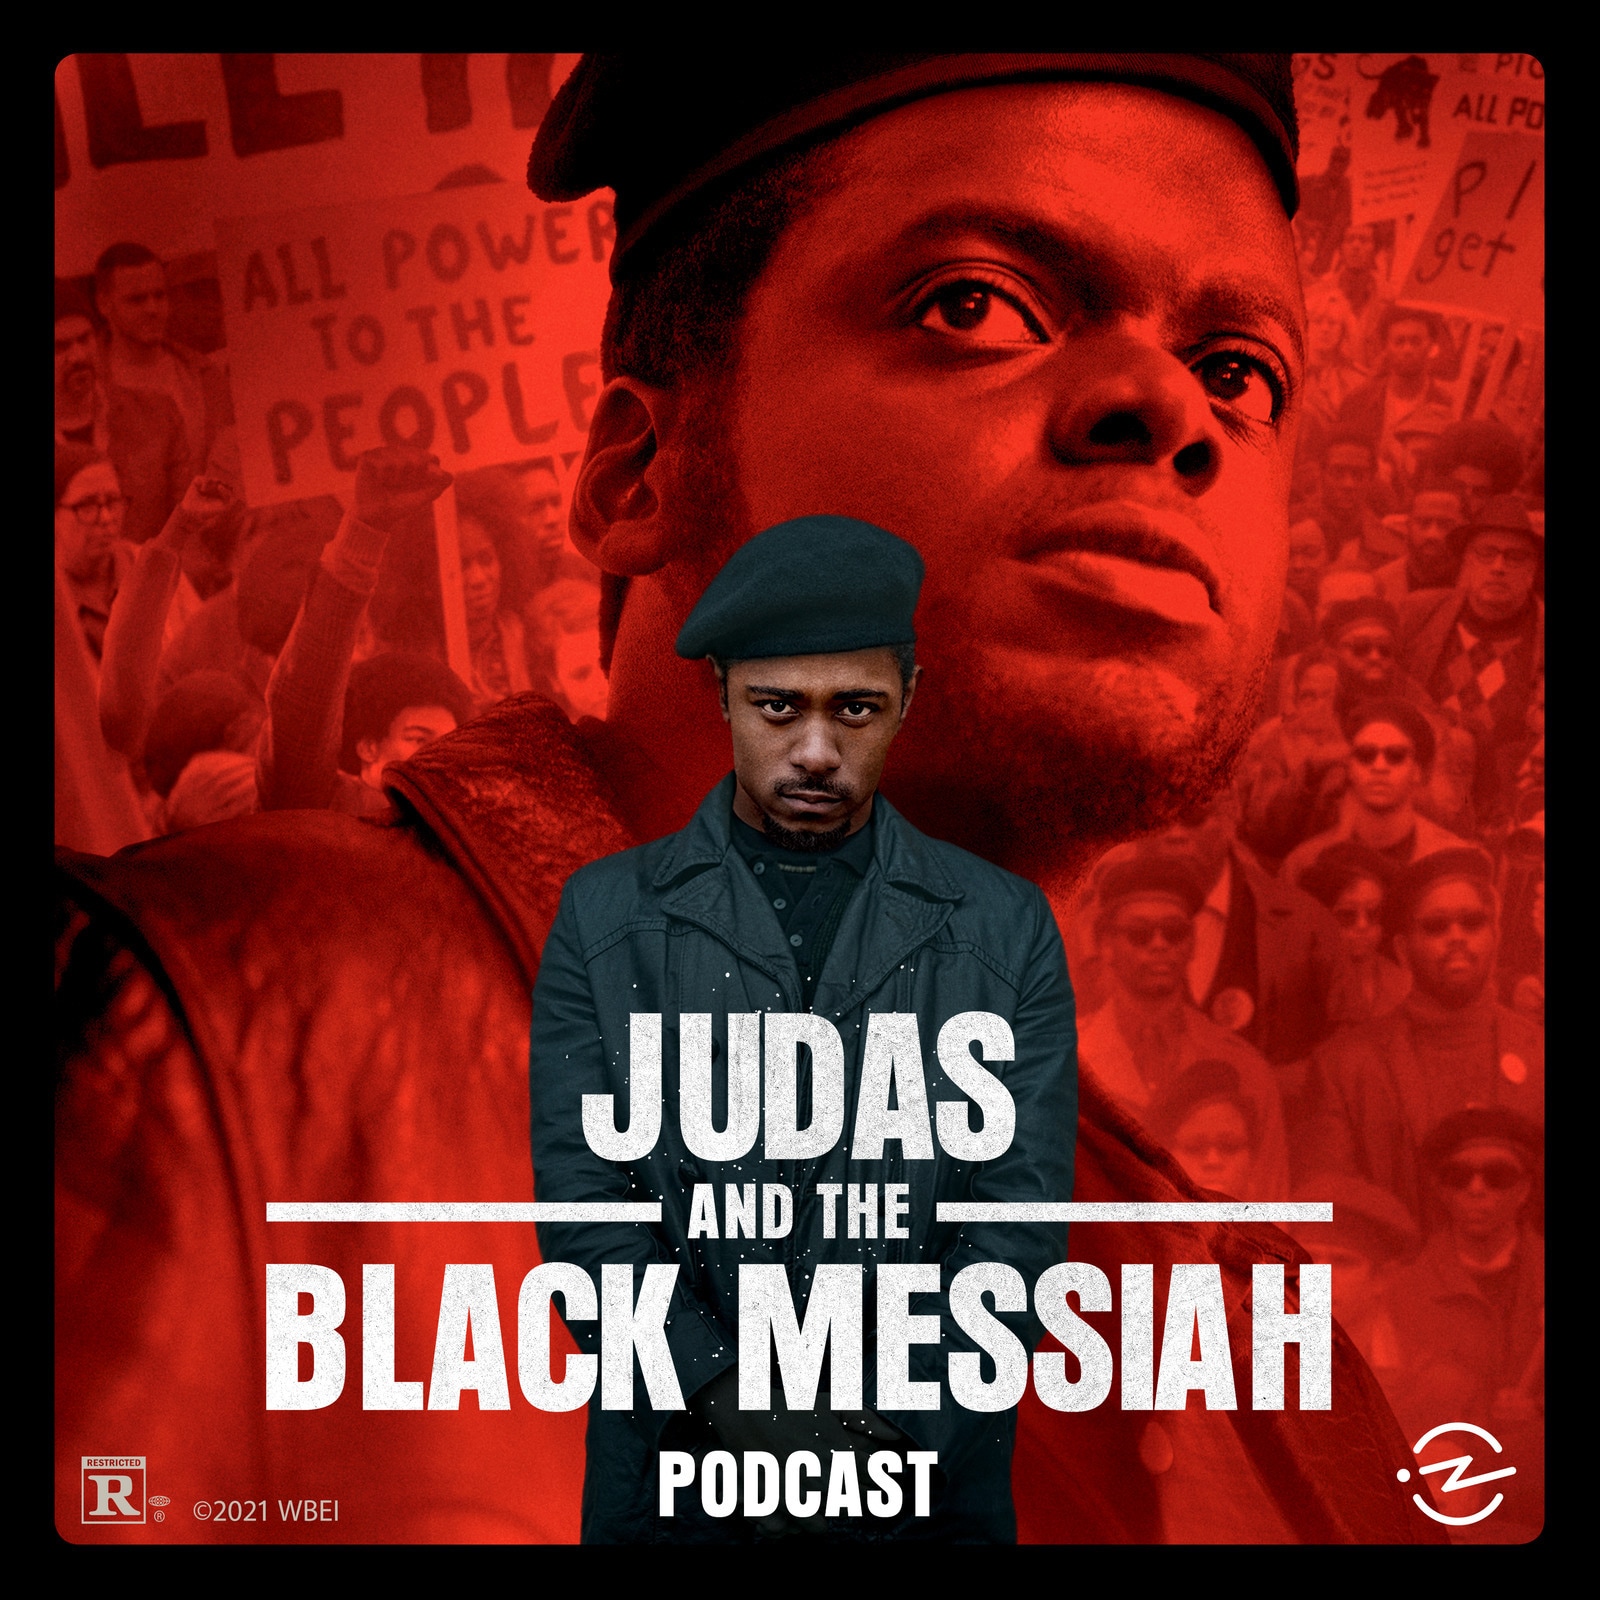 Judas and the Black Messiah Podcast